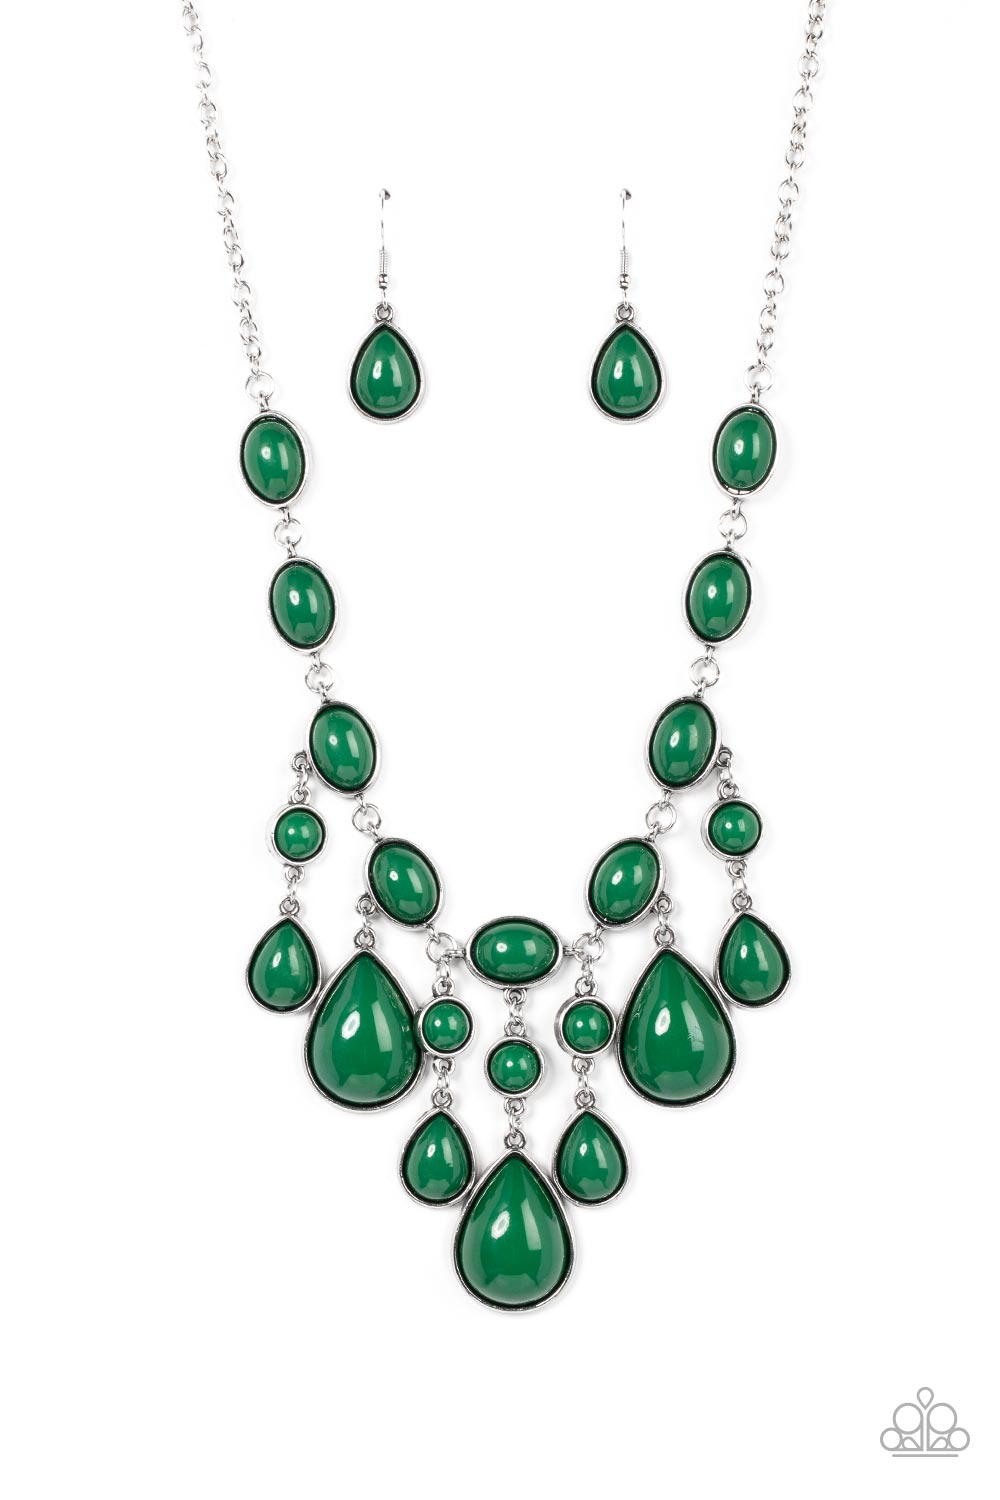 Paparazzi Necklaces - Mediterranean Mystery - Green